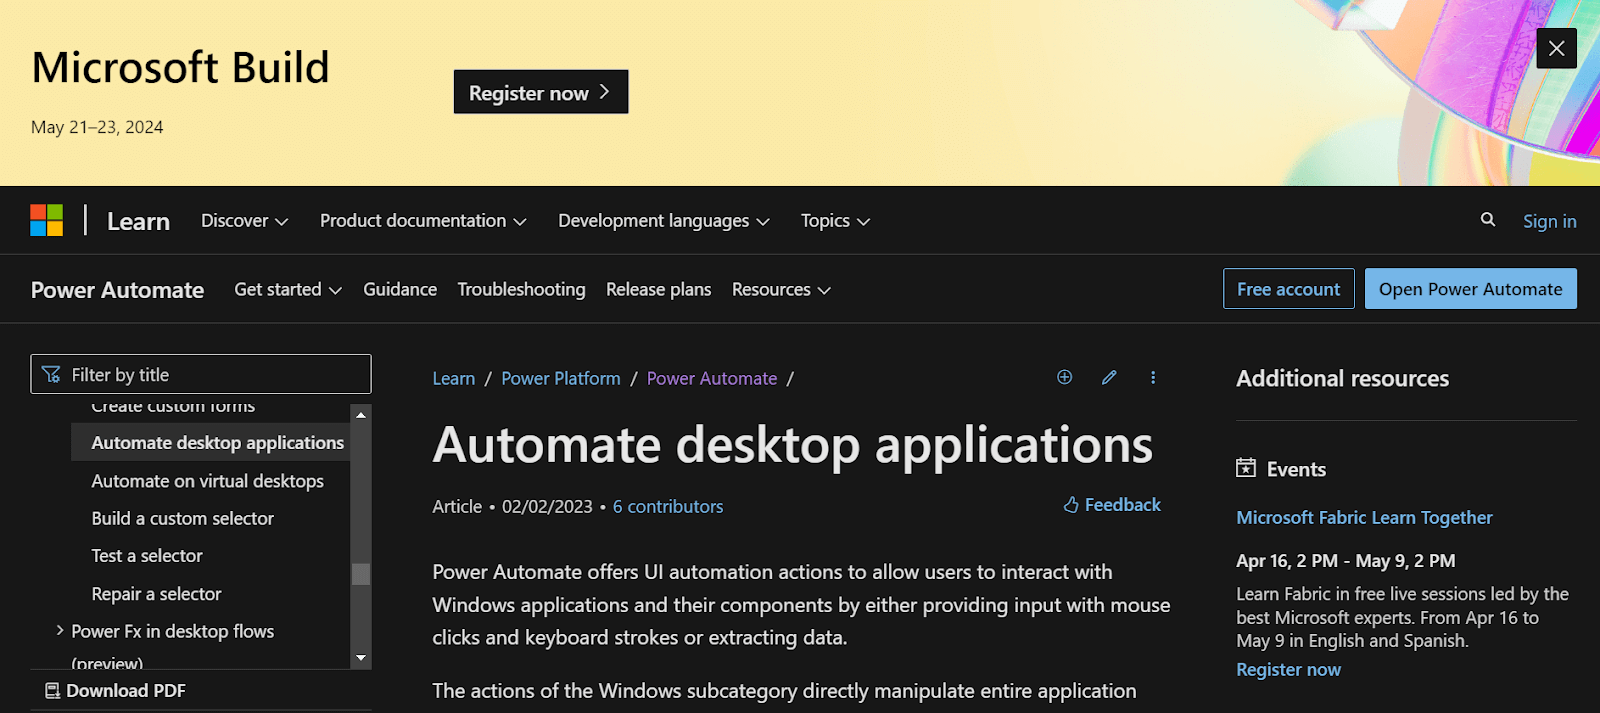 Power Automate desktop automation tool